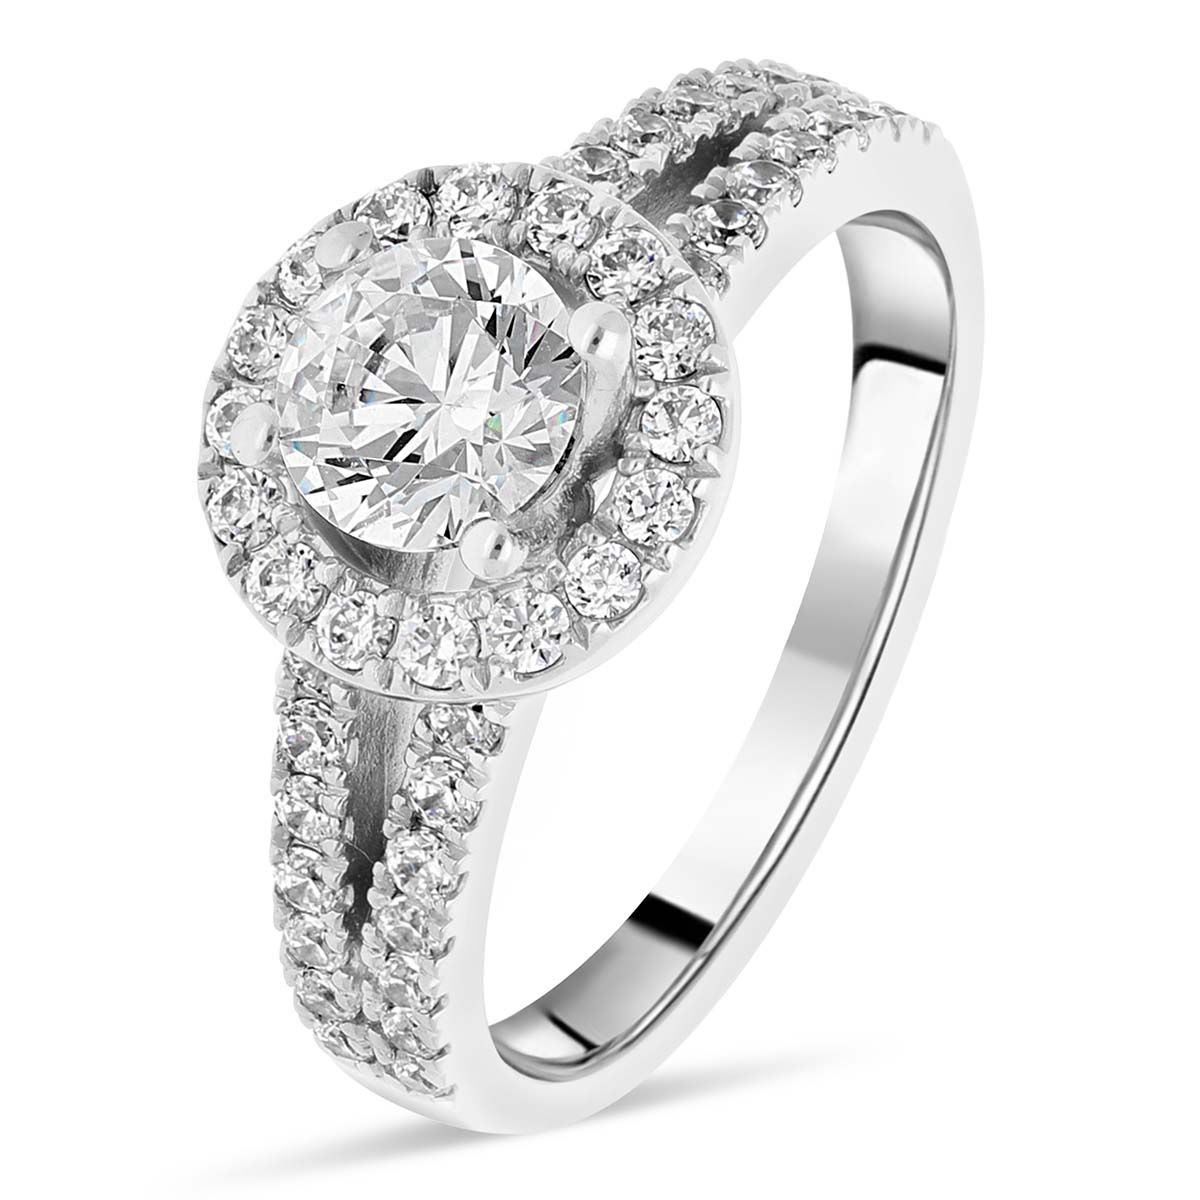 caiman-solitaires-diamants-certifies-entourage-or-blanc-750-